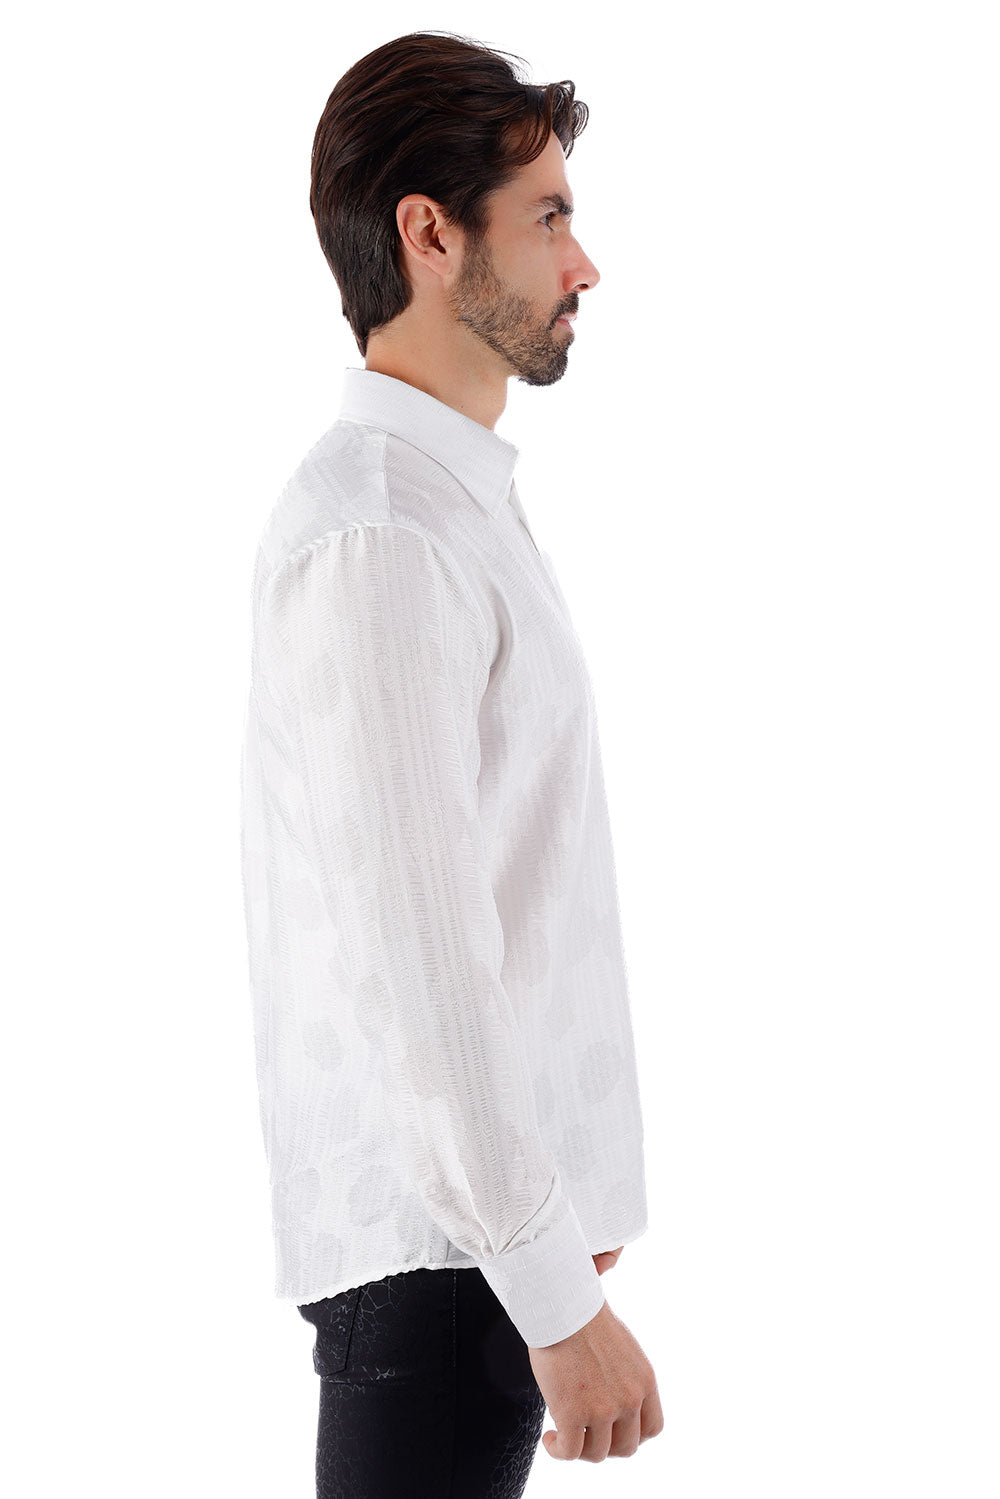 BARABAS Men's Floral Rose Button Down Long Sleeve Shirt 4B31 White